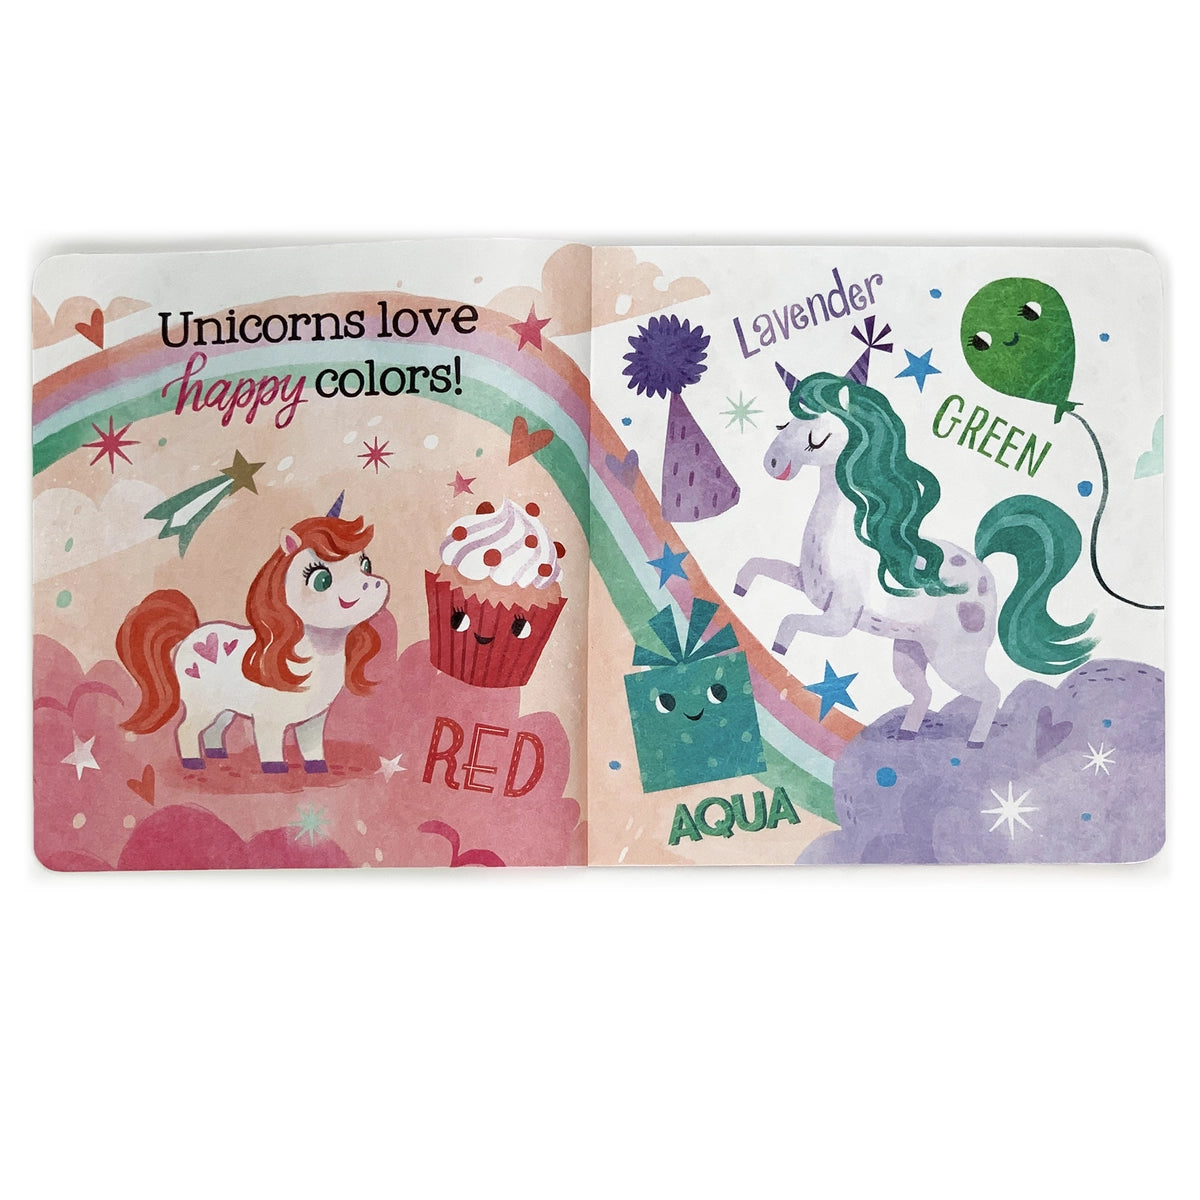 Unicorns Love Colors - A Tuffy Book  - Doodlebug's Children's Boutique